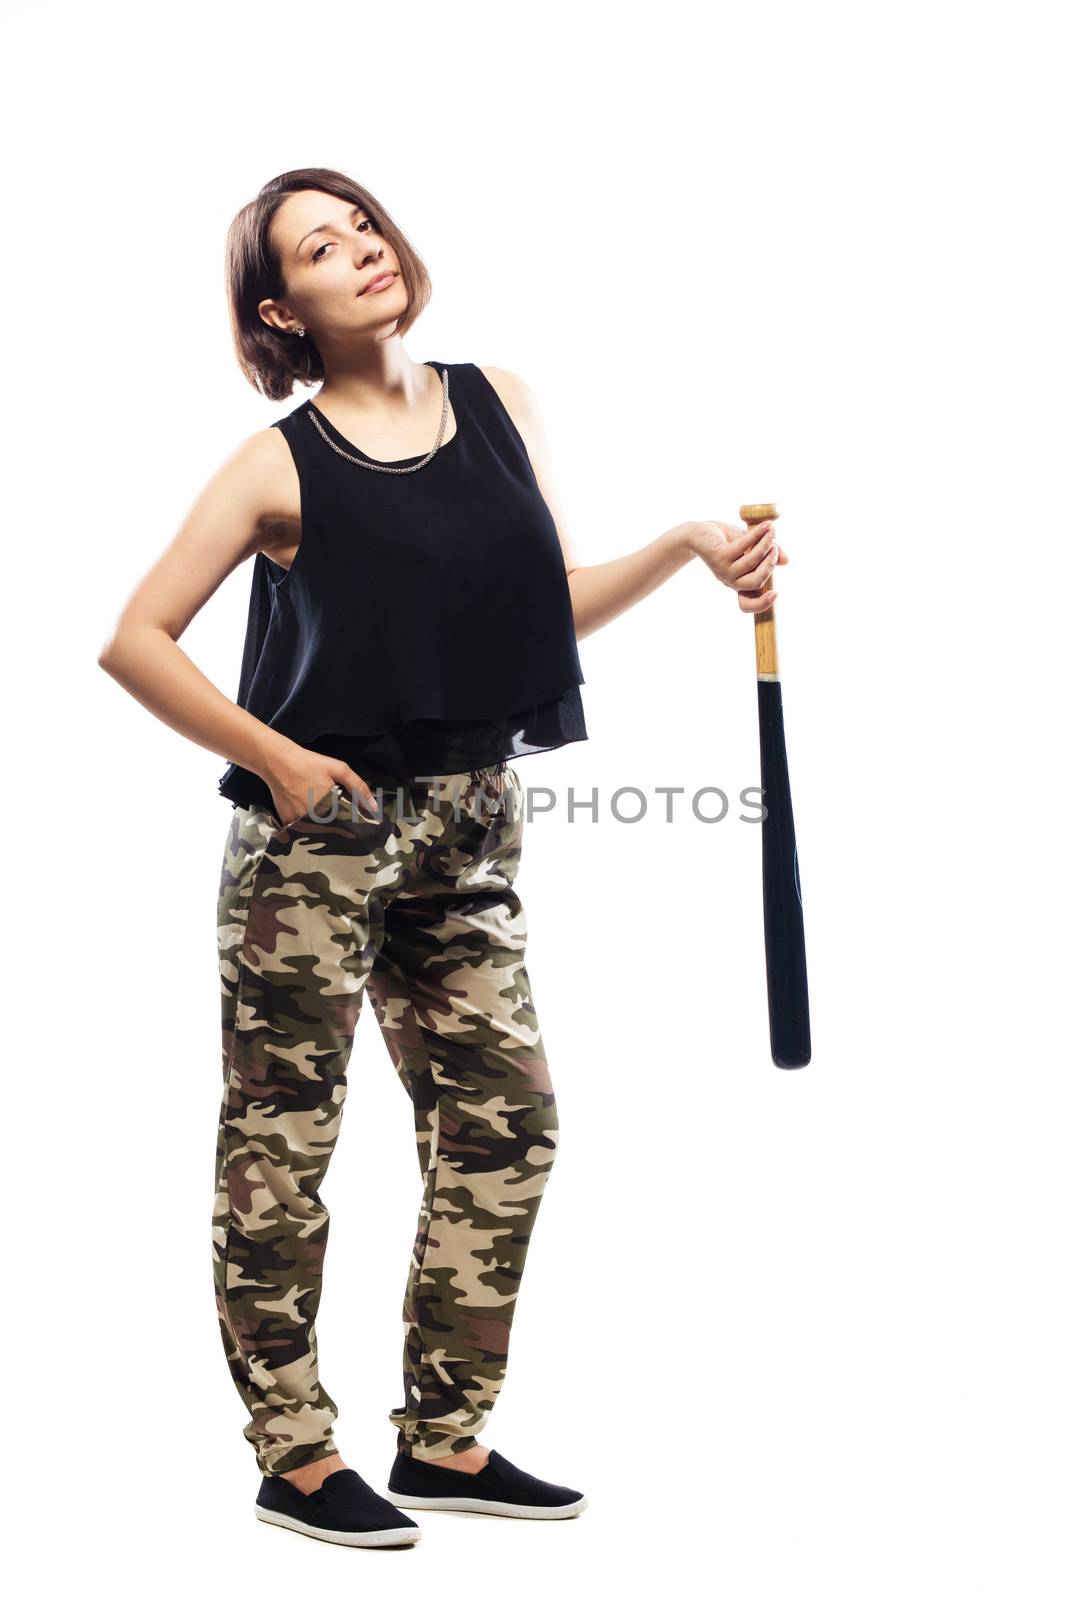 girl with baseball bat by kokimk